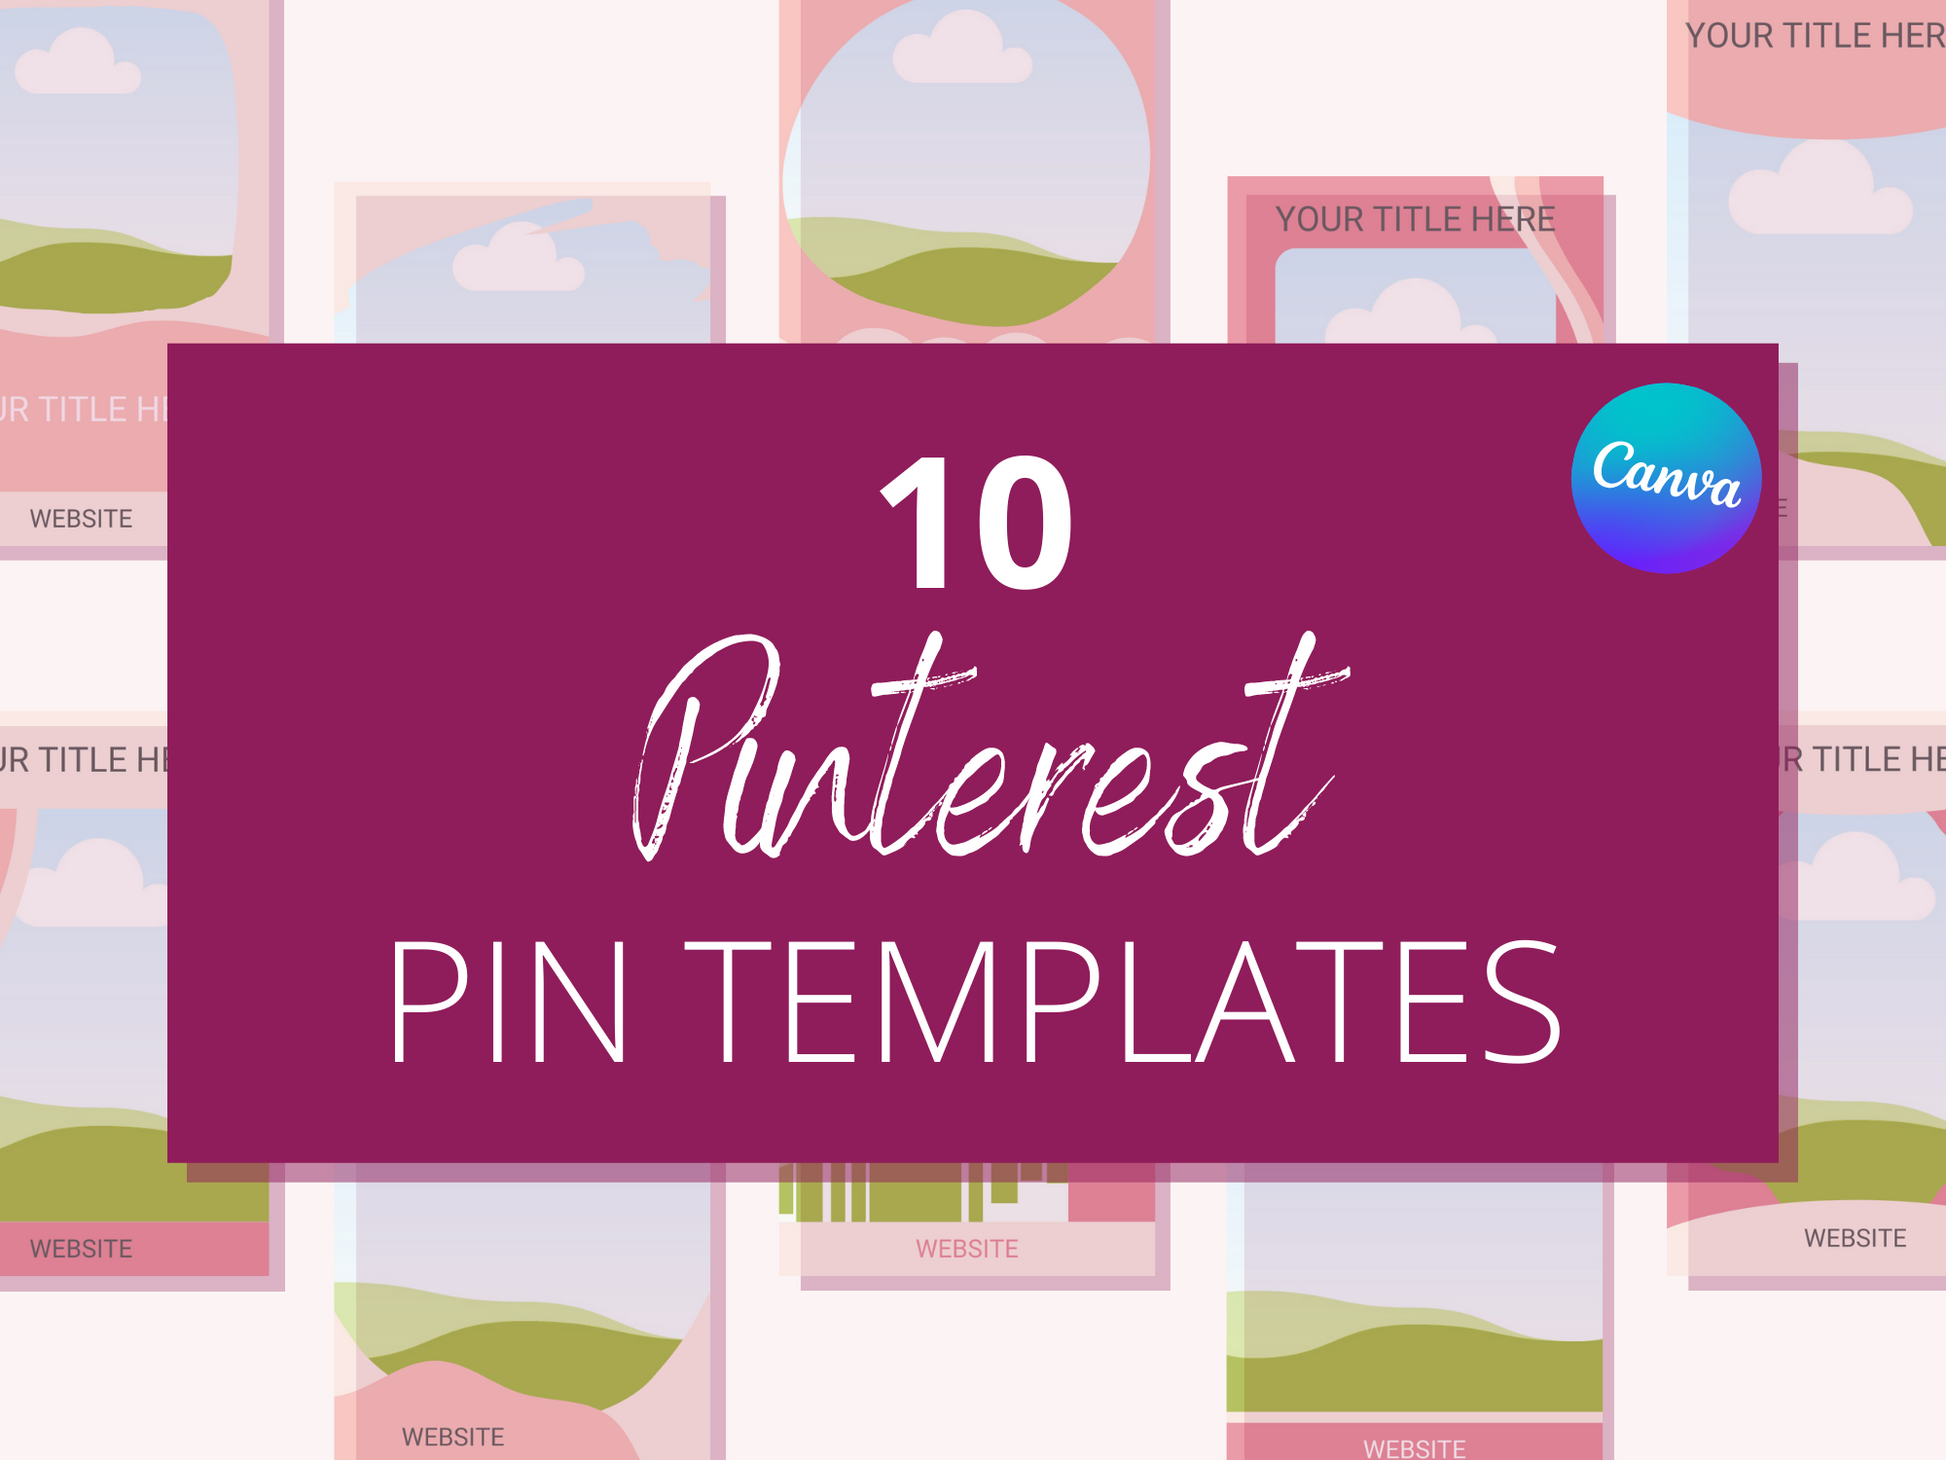 10 pinterest pin templates for canva- social media post templates - Melissa Talbott